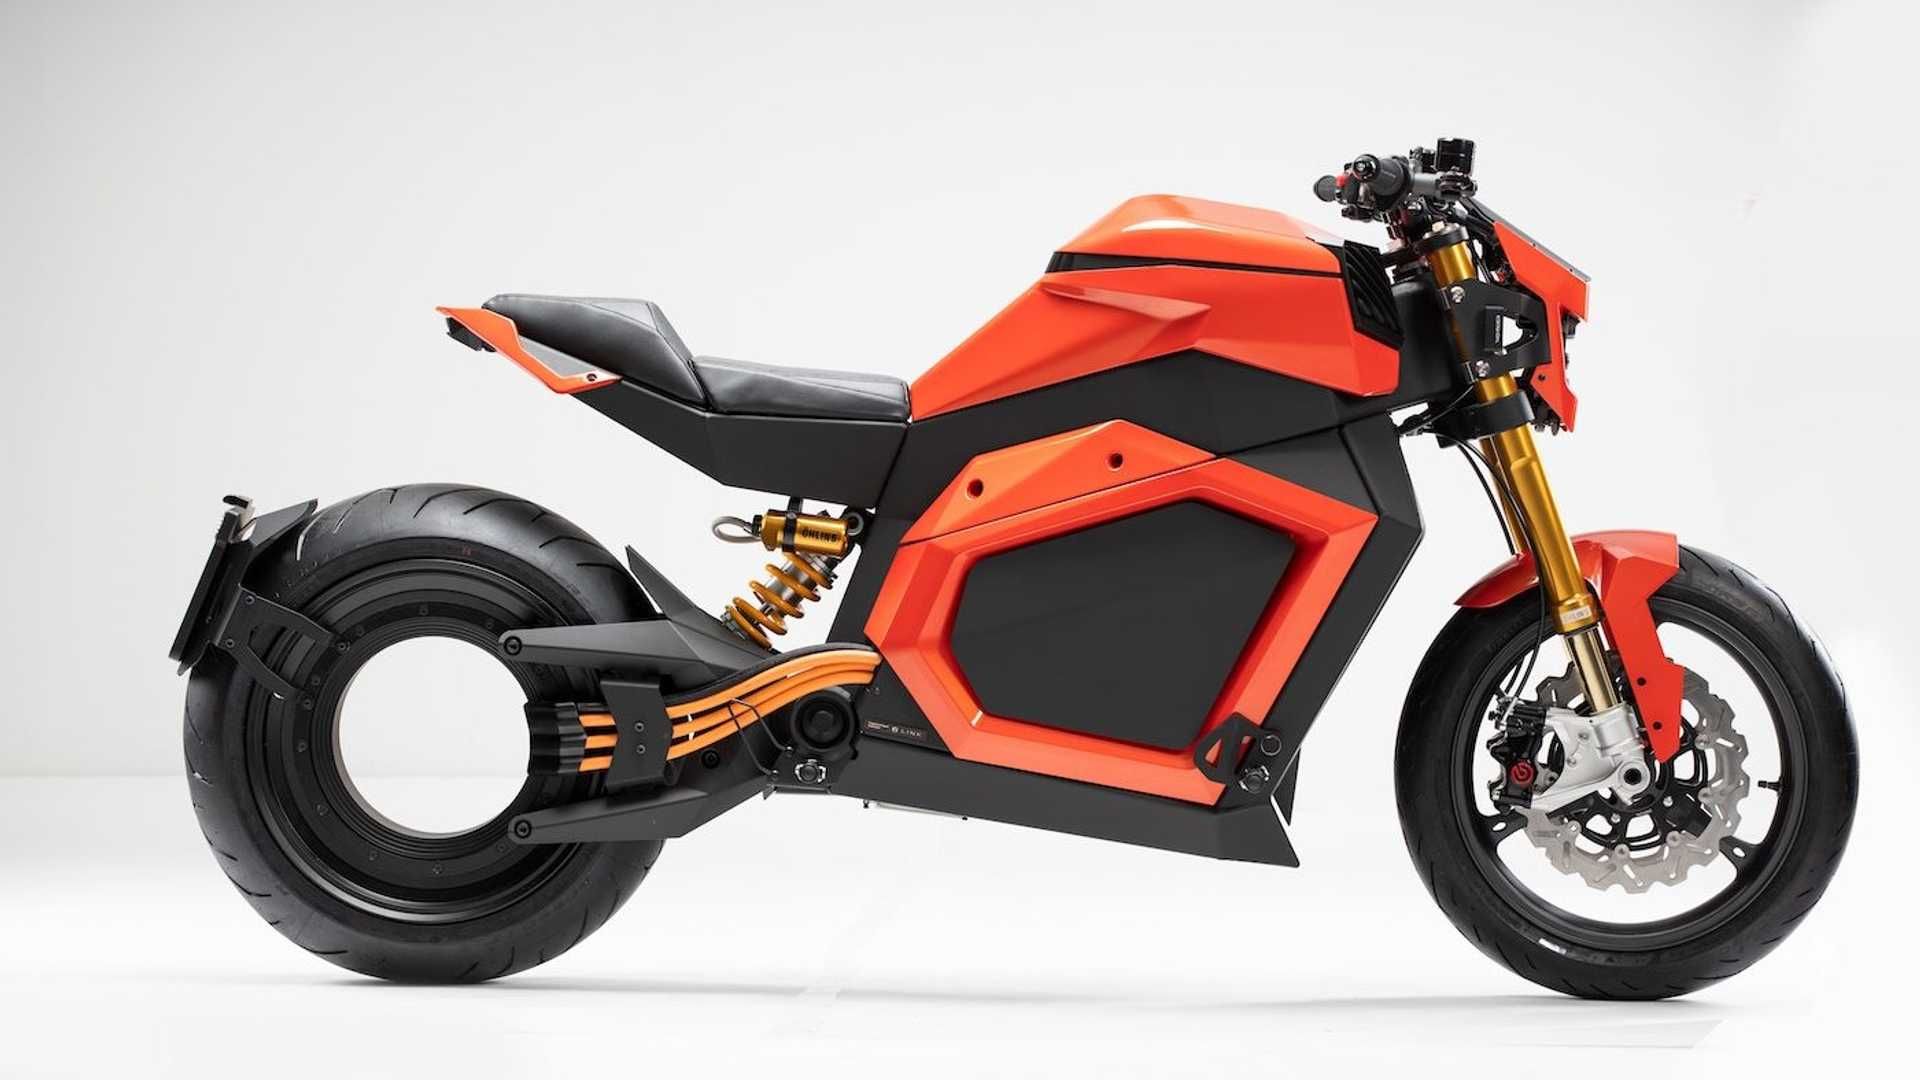 Electric bike Verge TS / موتورسیکلت الکتریکی ورج تی اس